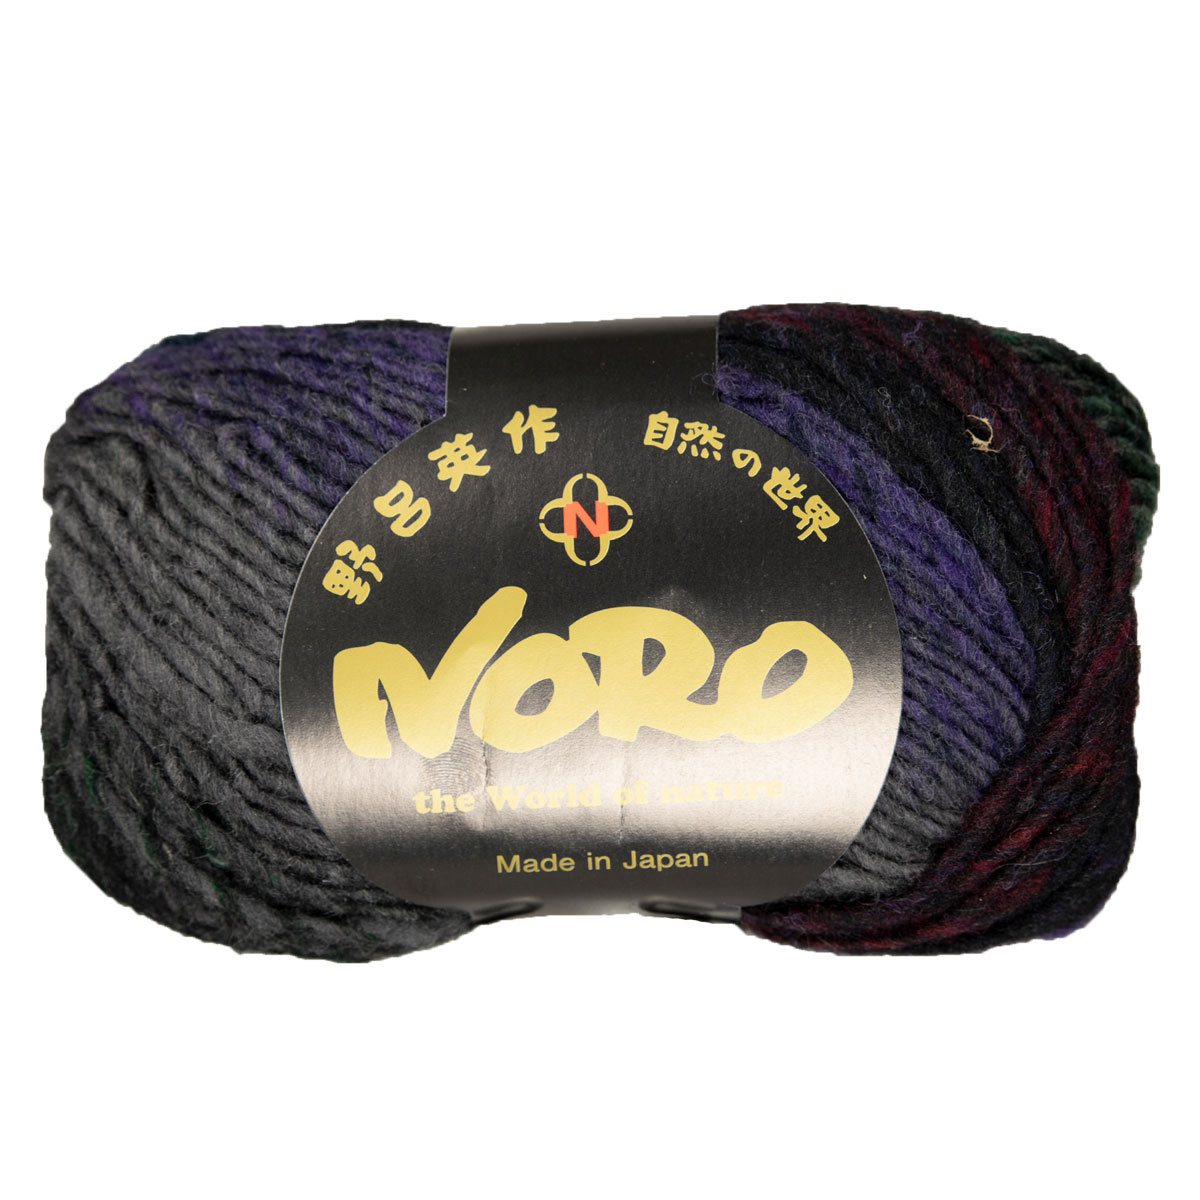 Noro Kureyon Yarn at Jimmy Beans Wool